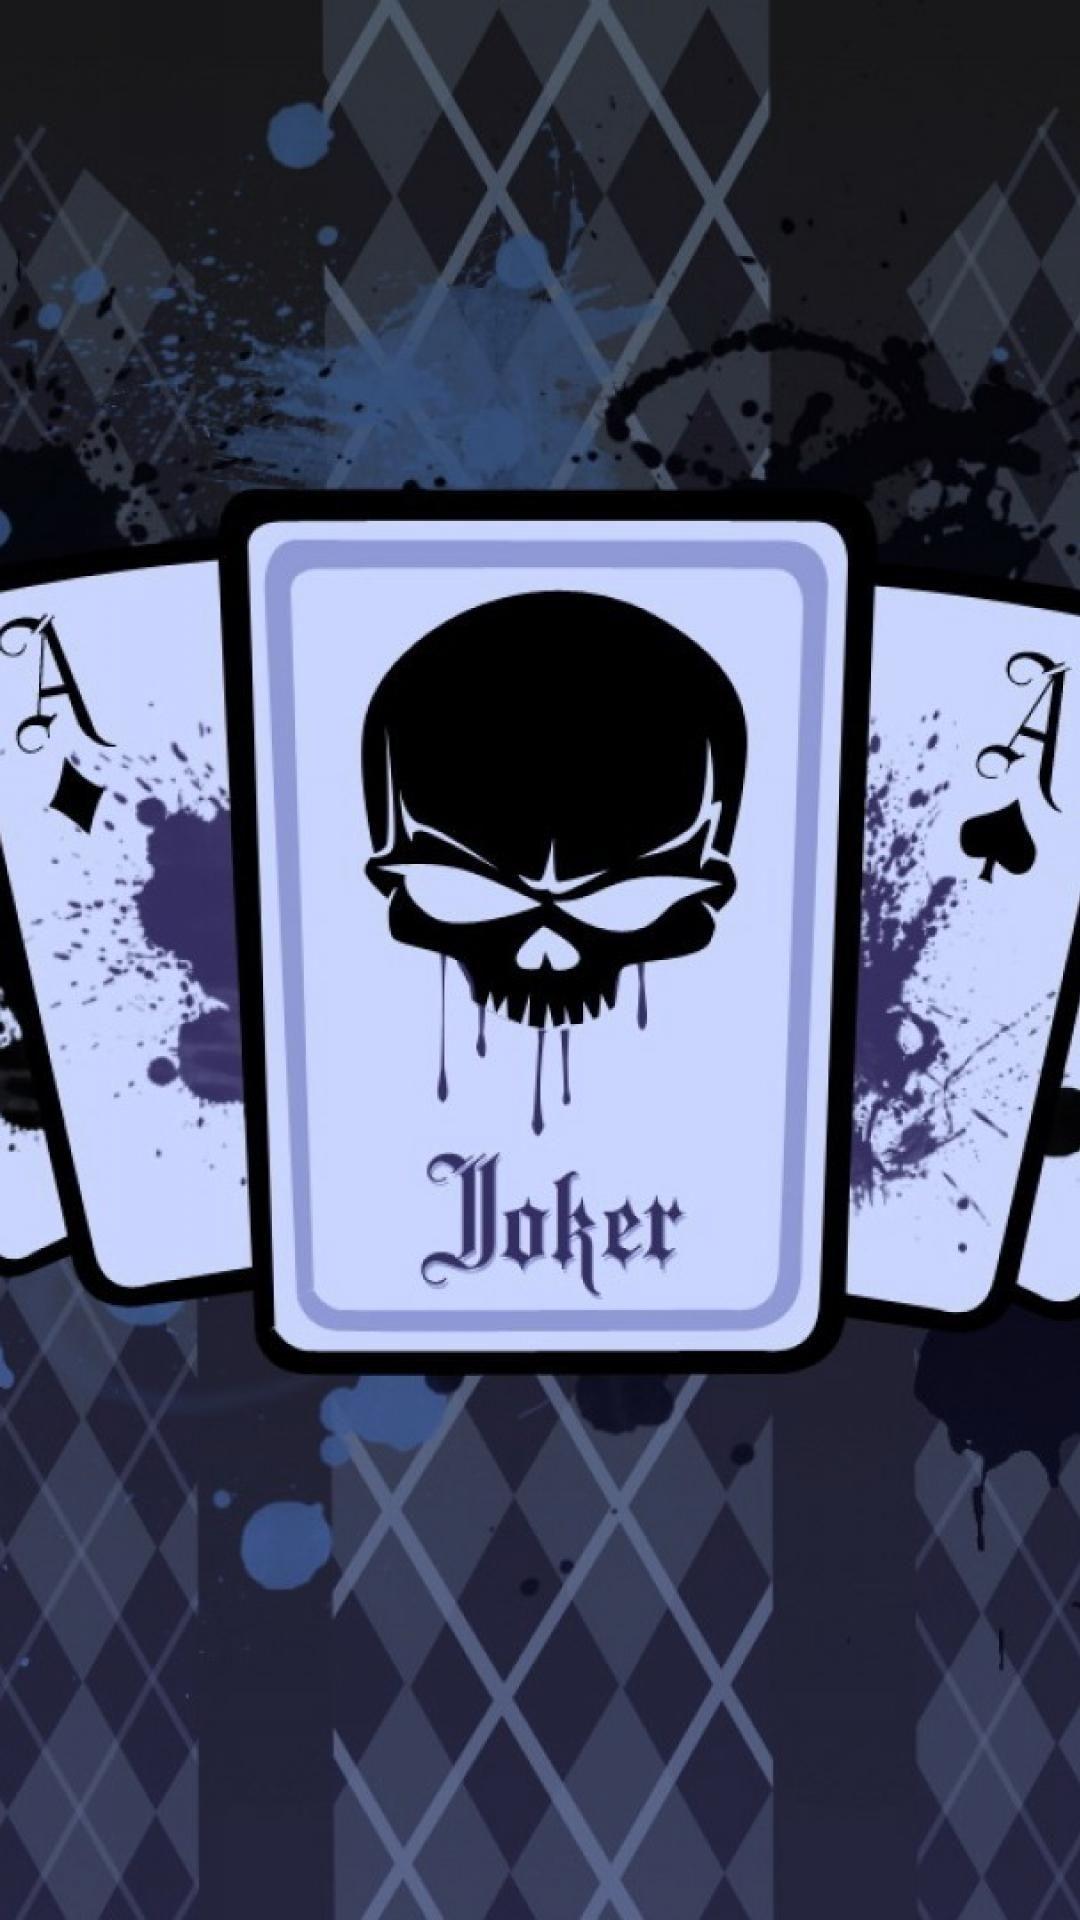 joker card wallpaper 2 by bluedragon77 on DeviantArt